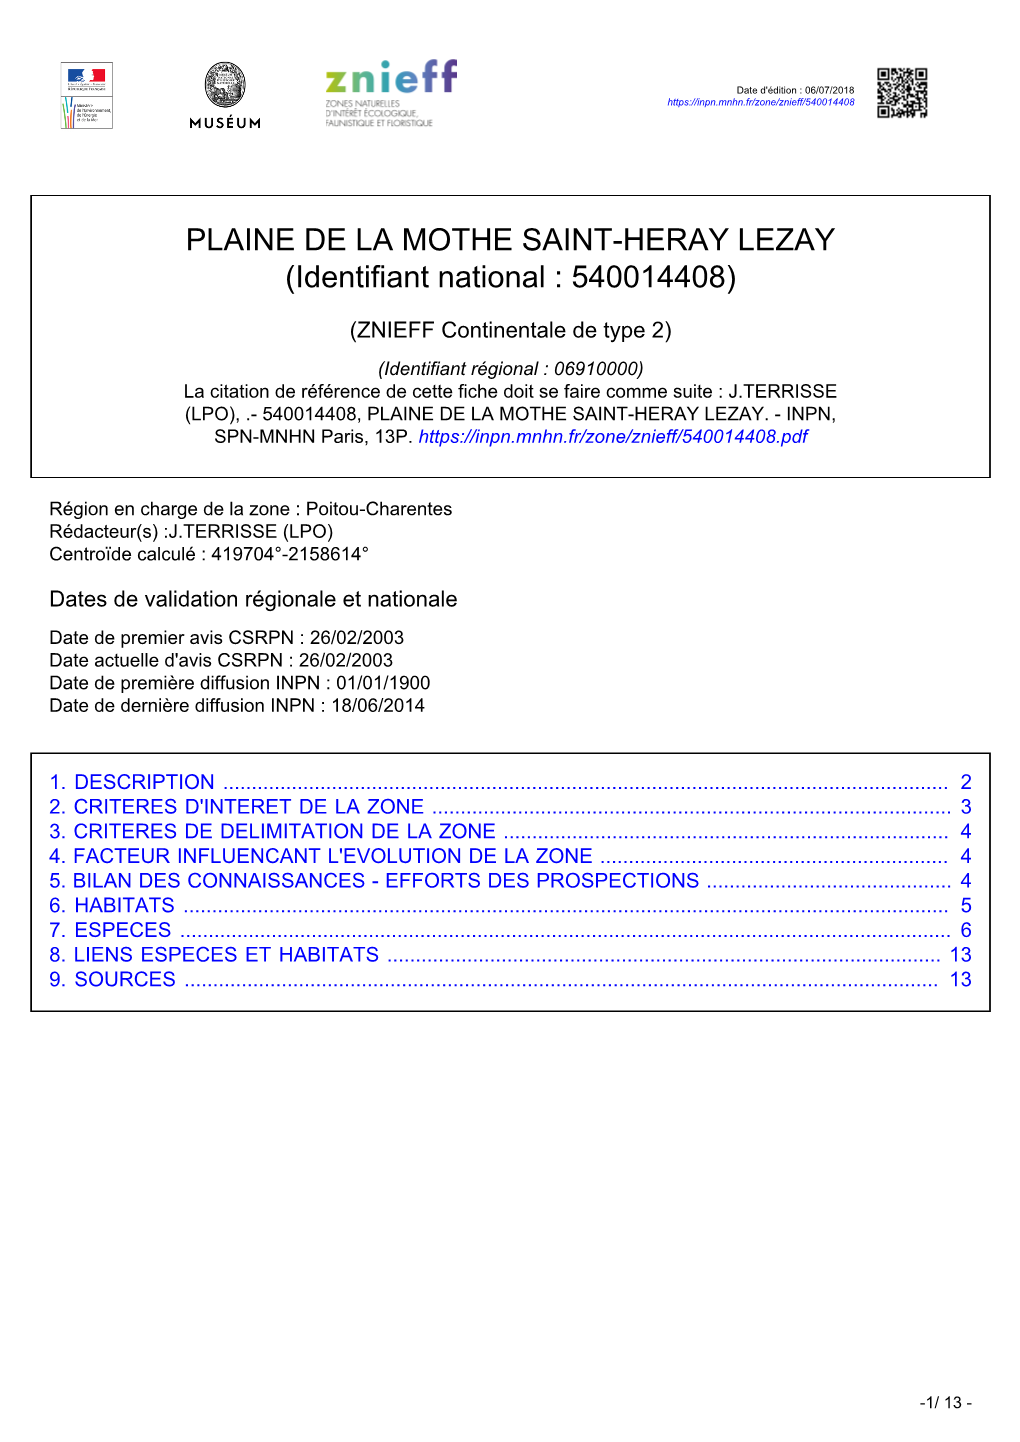 PLAINE DE LA MOTHE SAINT-HERAY LEZAY (Identifiant National : 540014408)